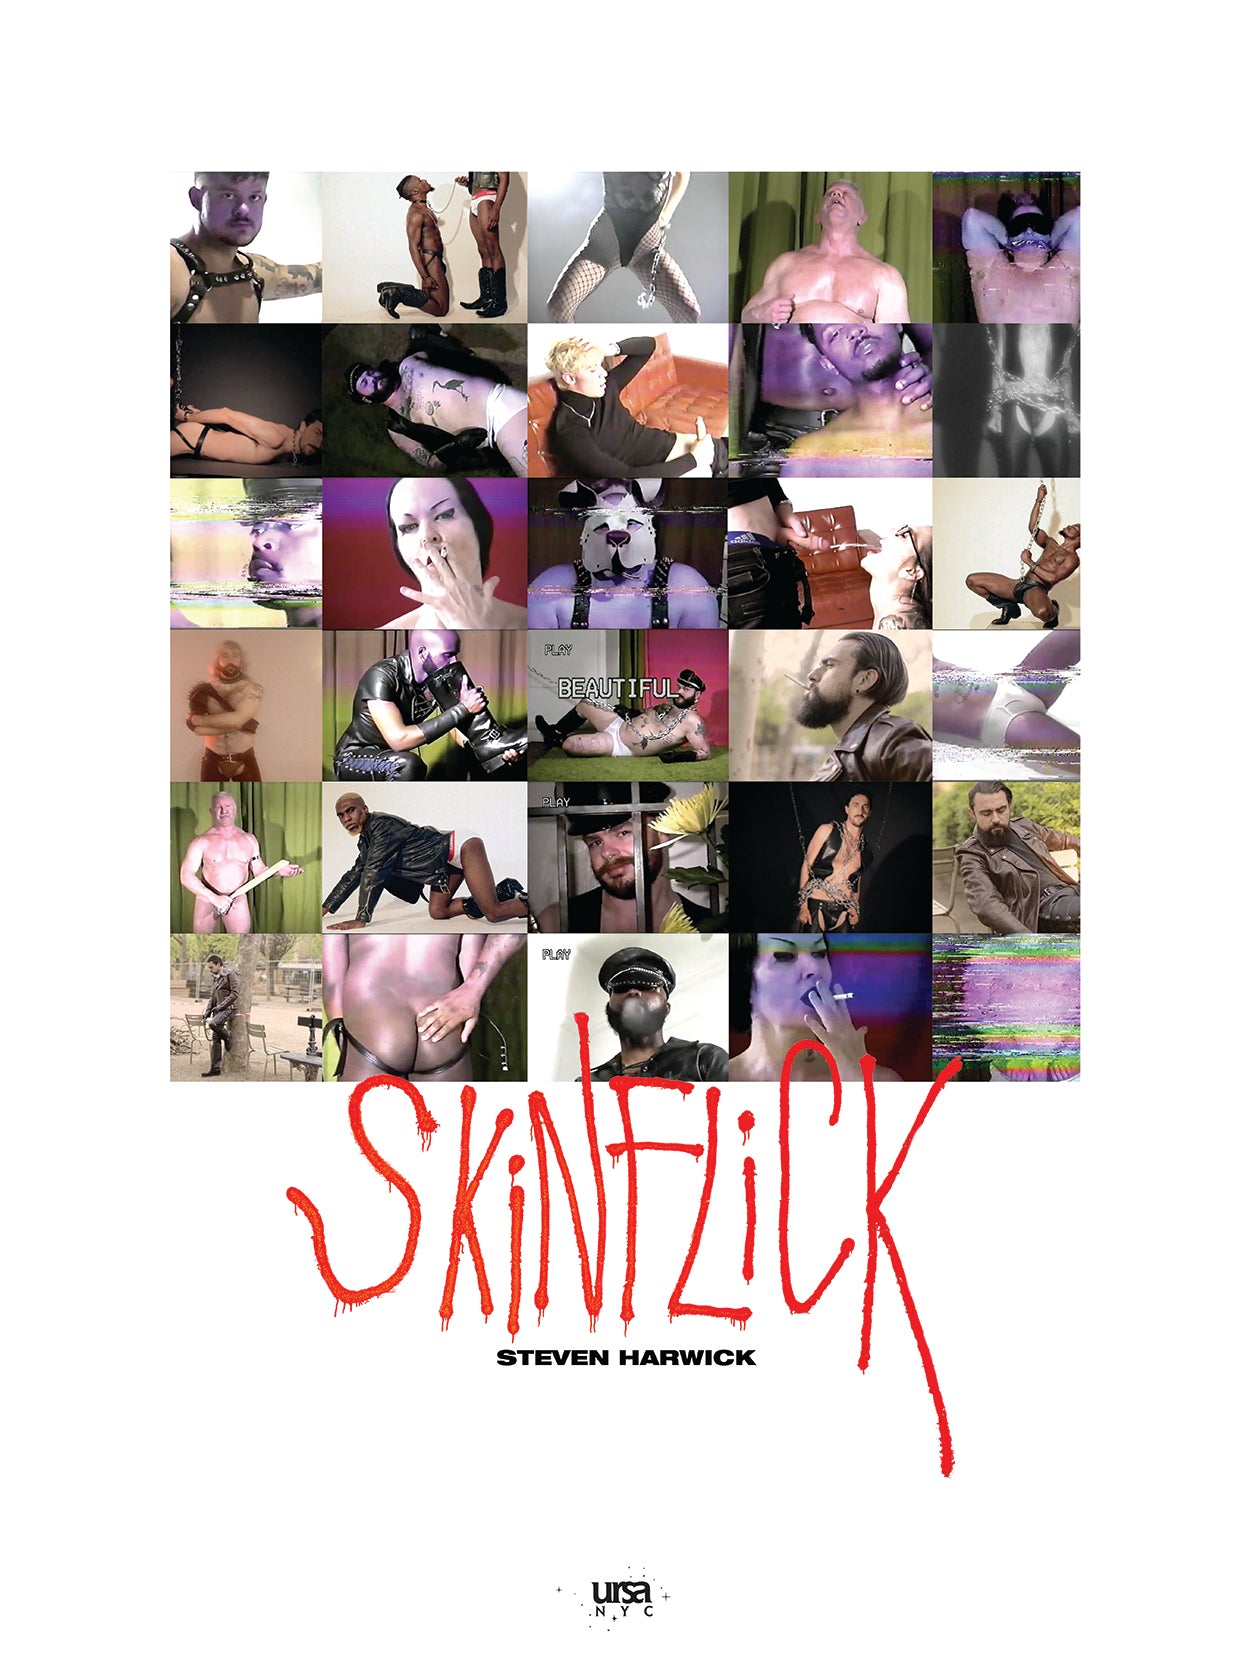 SKiNFLiCK Poster - VHS